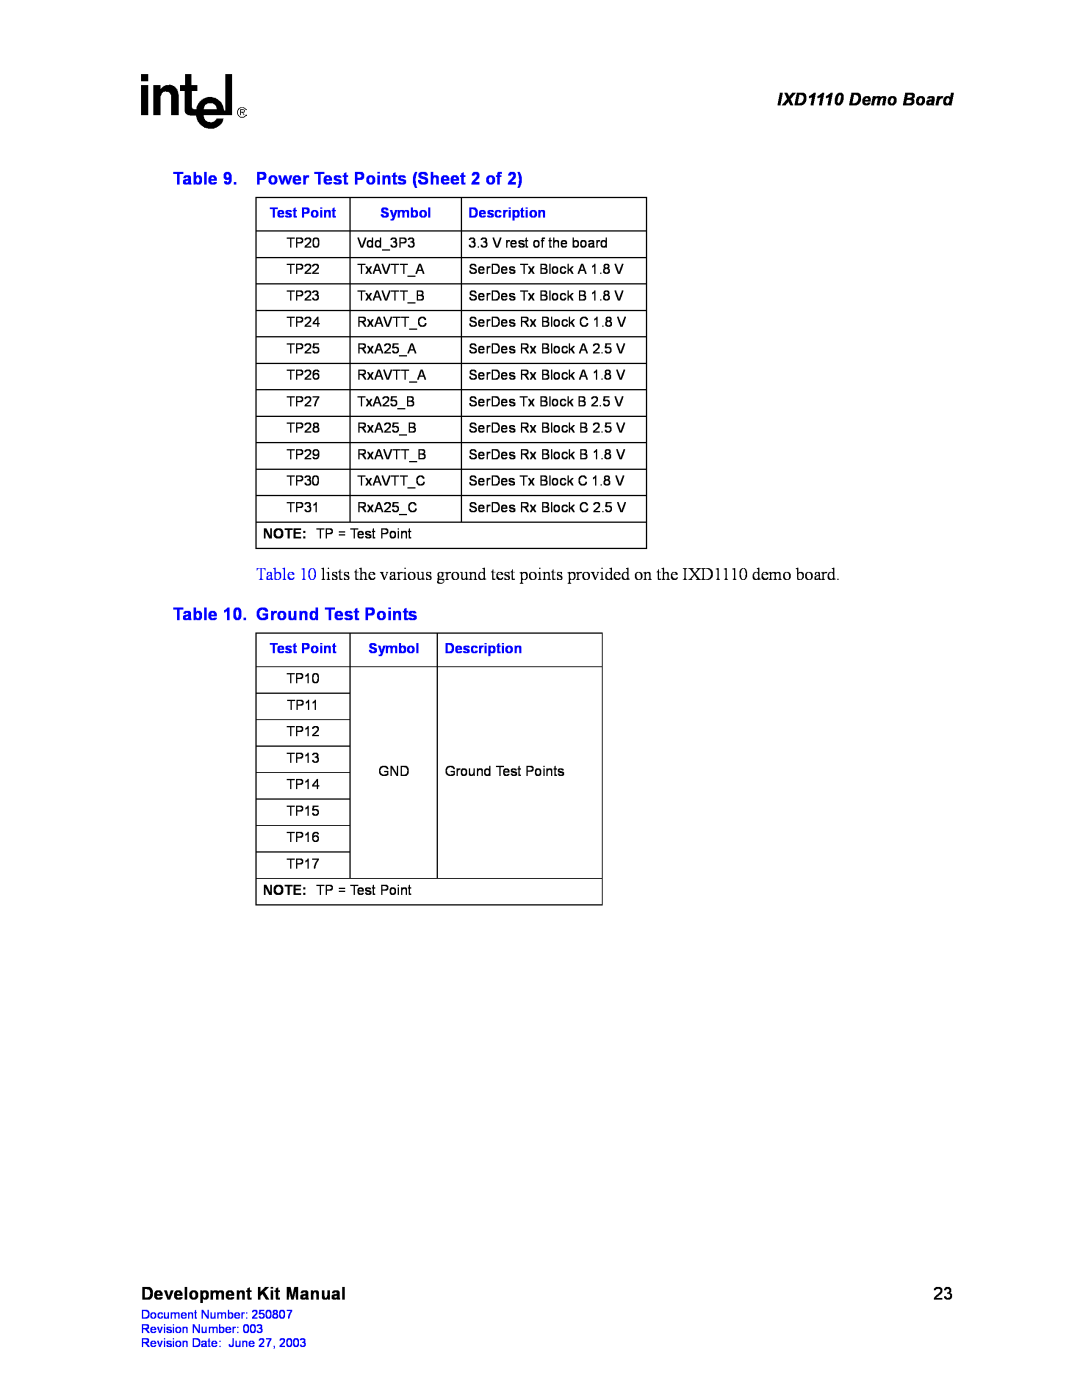 Intel manual Power Test Points Sheet 2 of, Ground Test Points, IXD1110 Demo Board, Development Kit Manual 